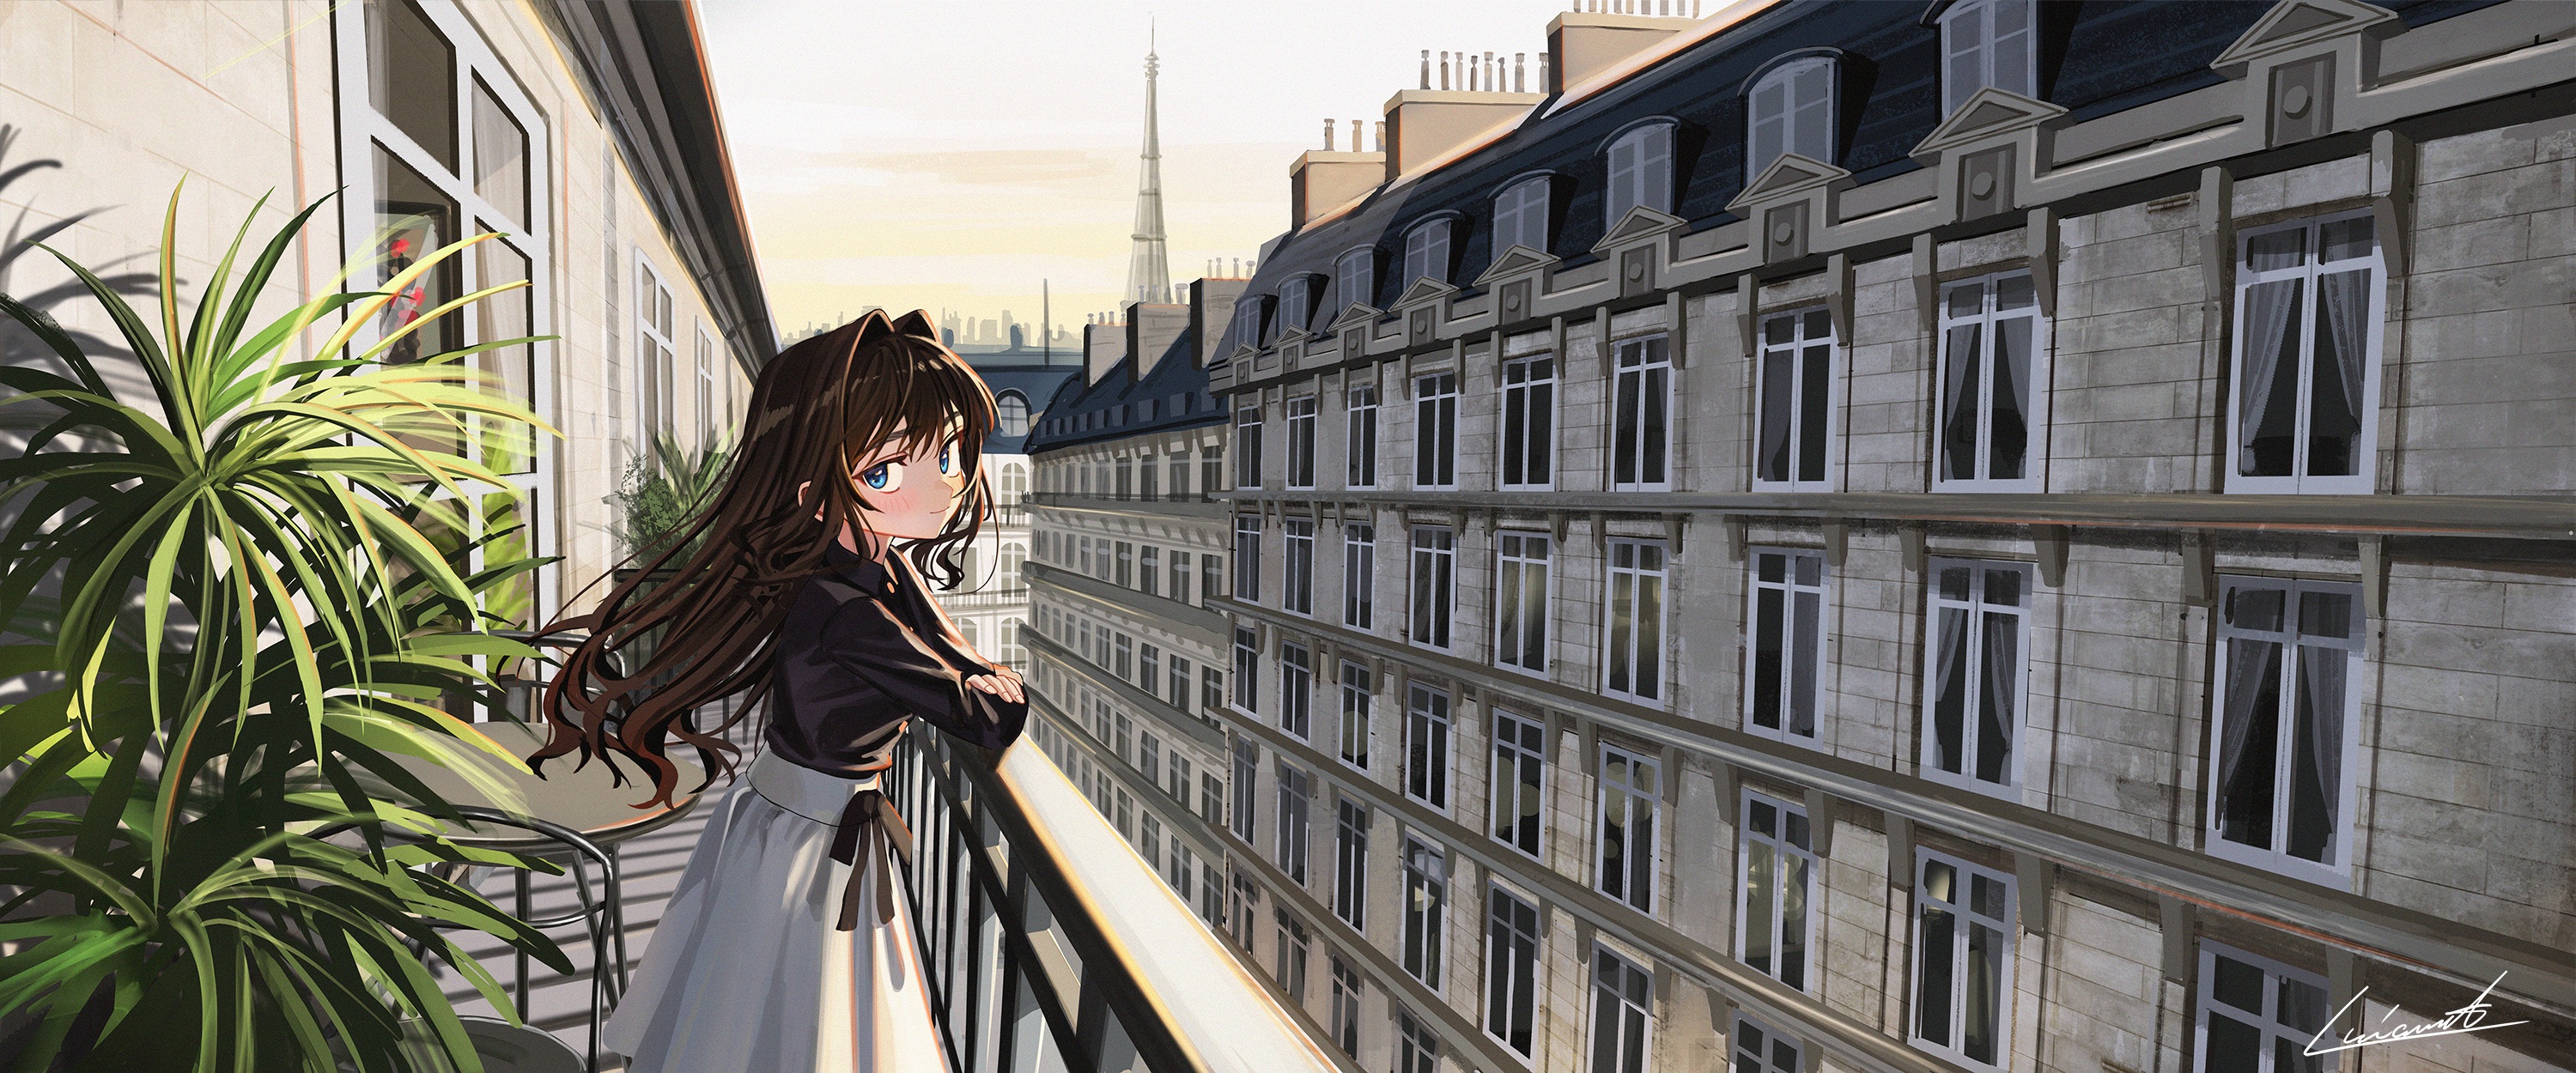 Storm in paris (anime style) by BothSamuel on DeviantArt